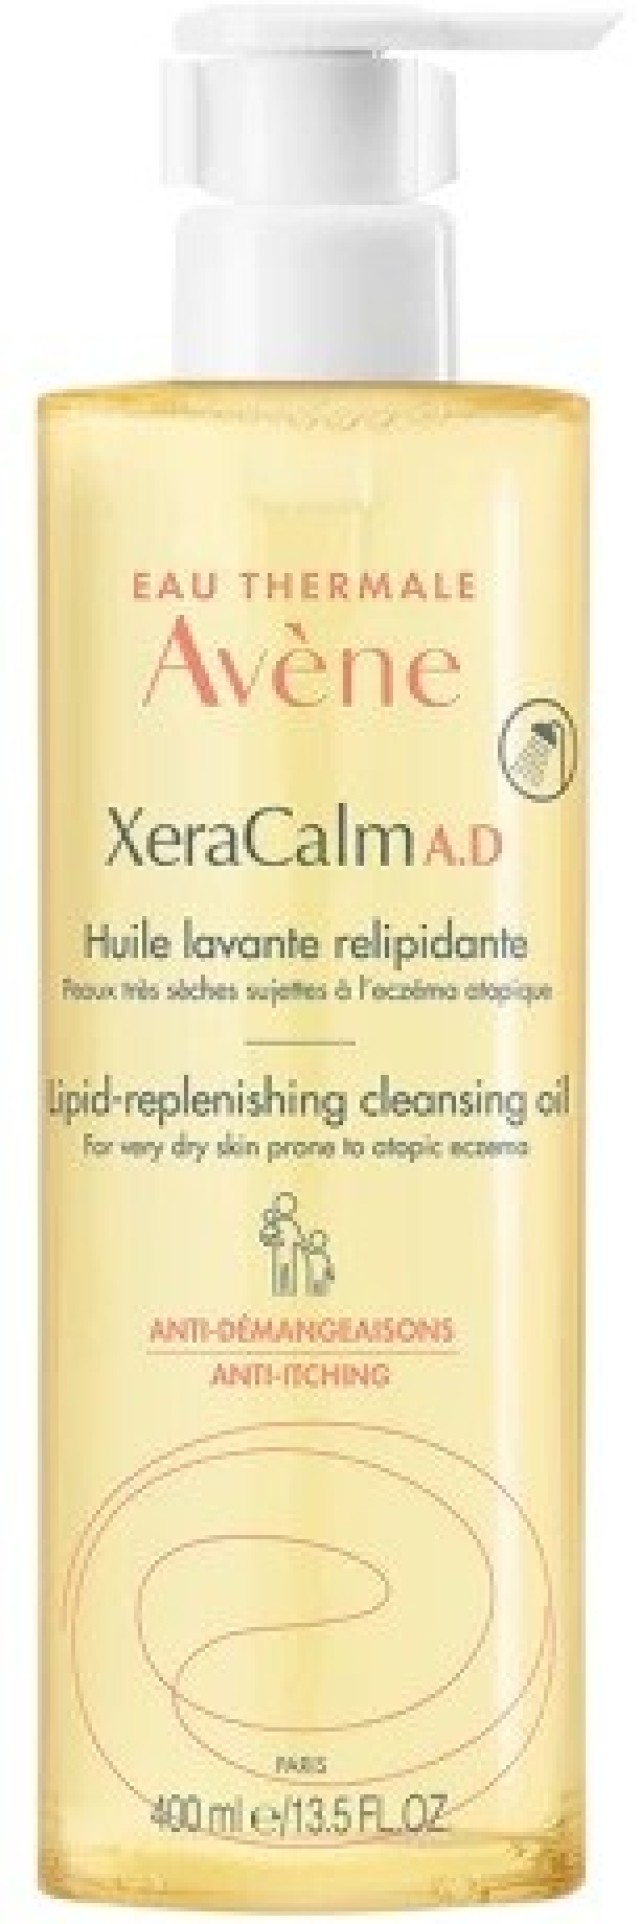 Avene Xeracalm A.D. Huile Lavante Relipidante Λάδι Καθαρισμού για Ξηρό Δέρμα με Τάση Ατοπίας 400ml